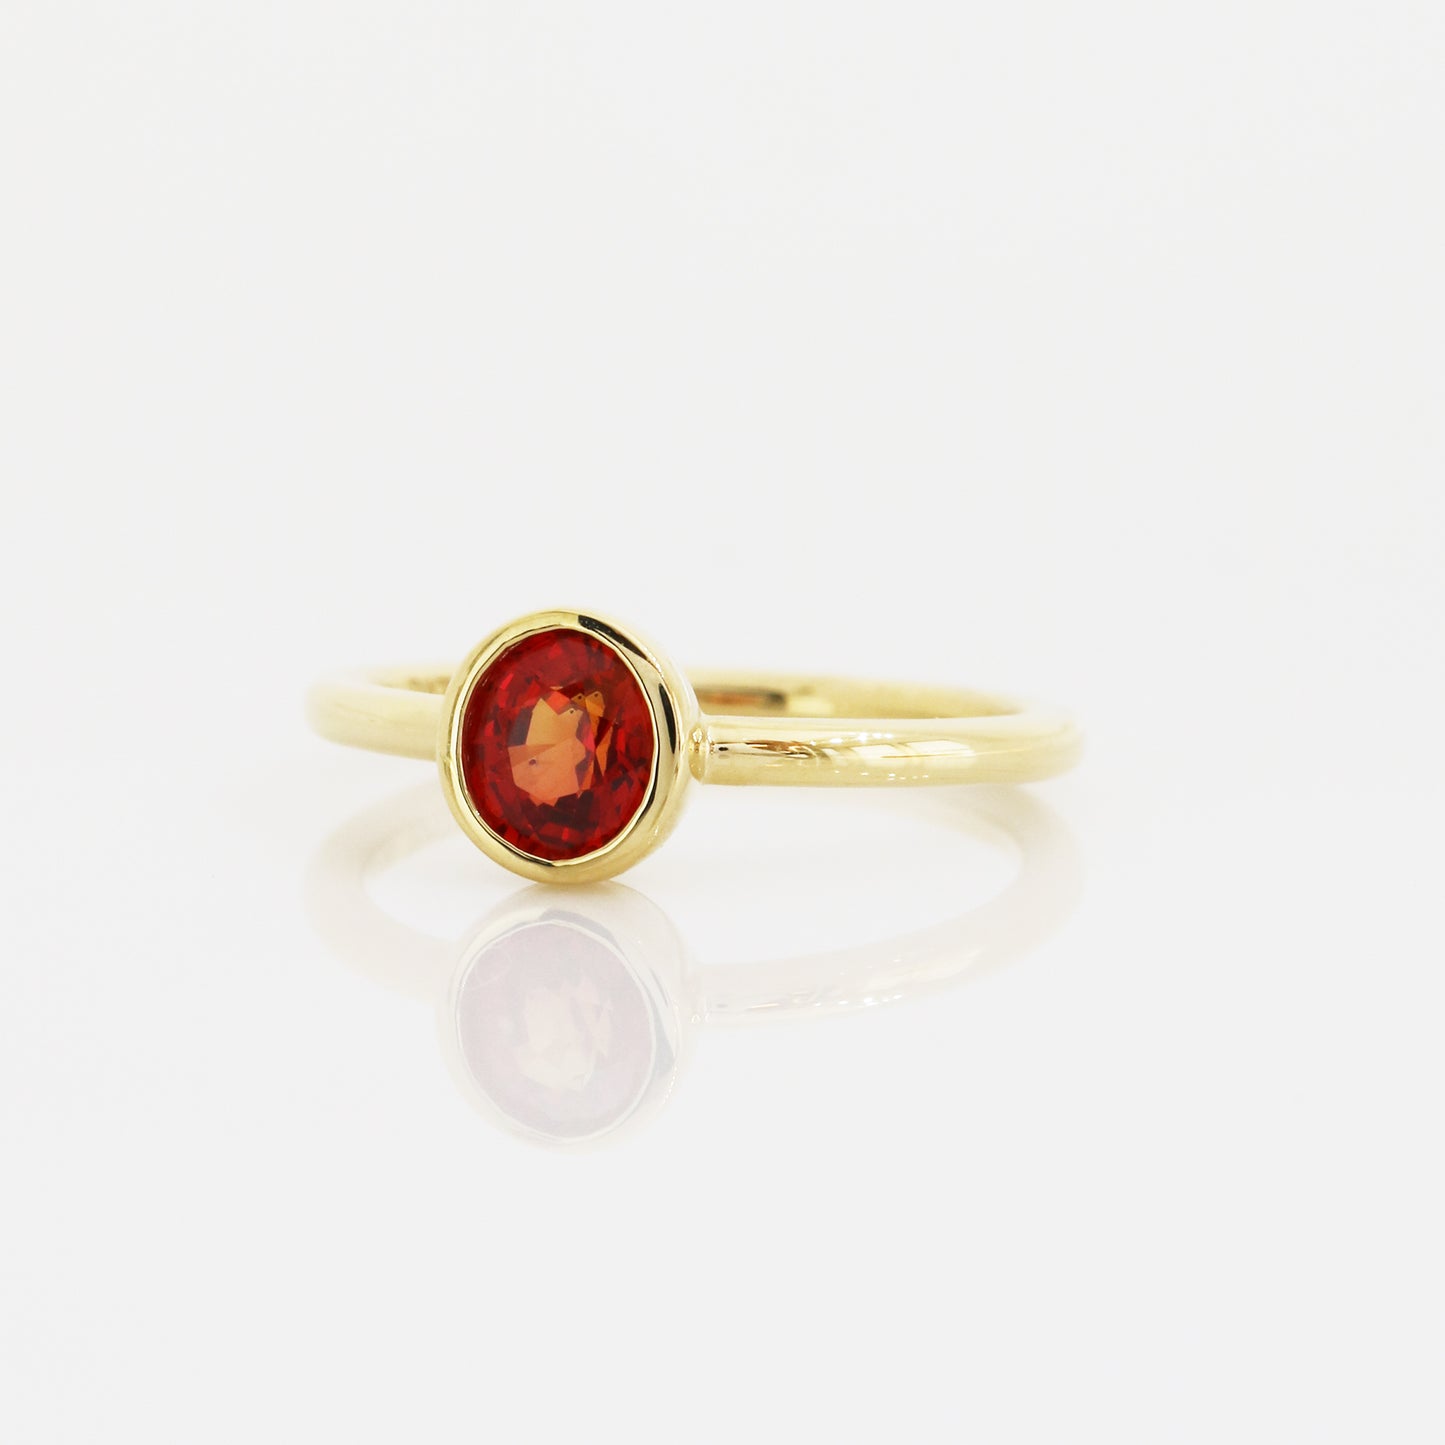 18k黃金包邊鑲橙紅色藍寶石戒指側面 18k Yellow Gold Vintage Bezel-Set Orangey Red Sapphire Ring on side view